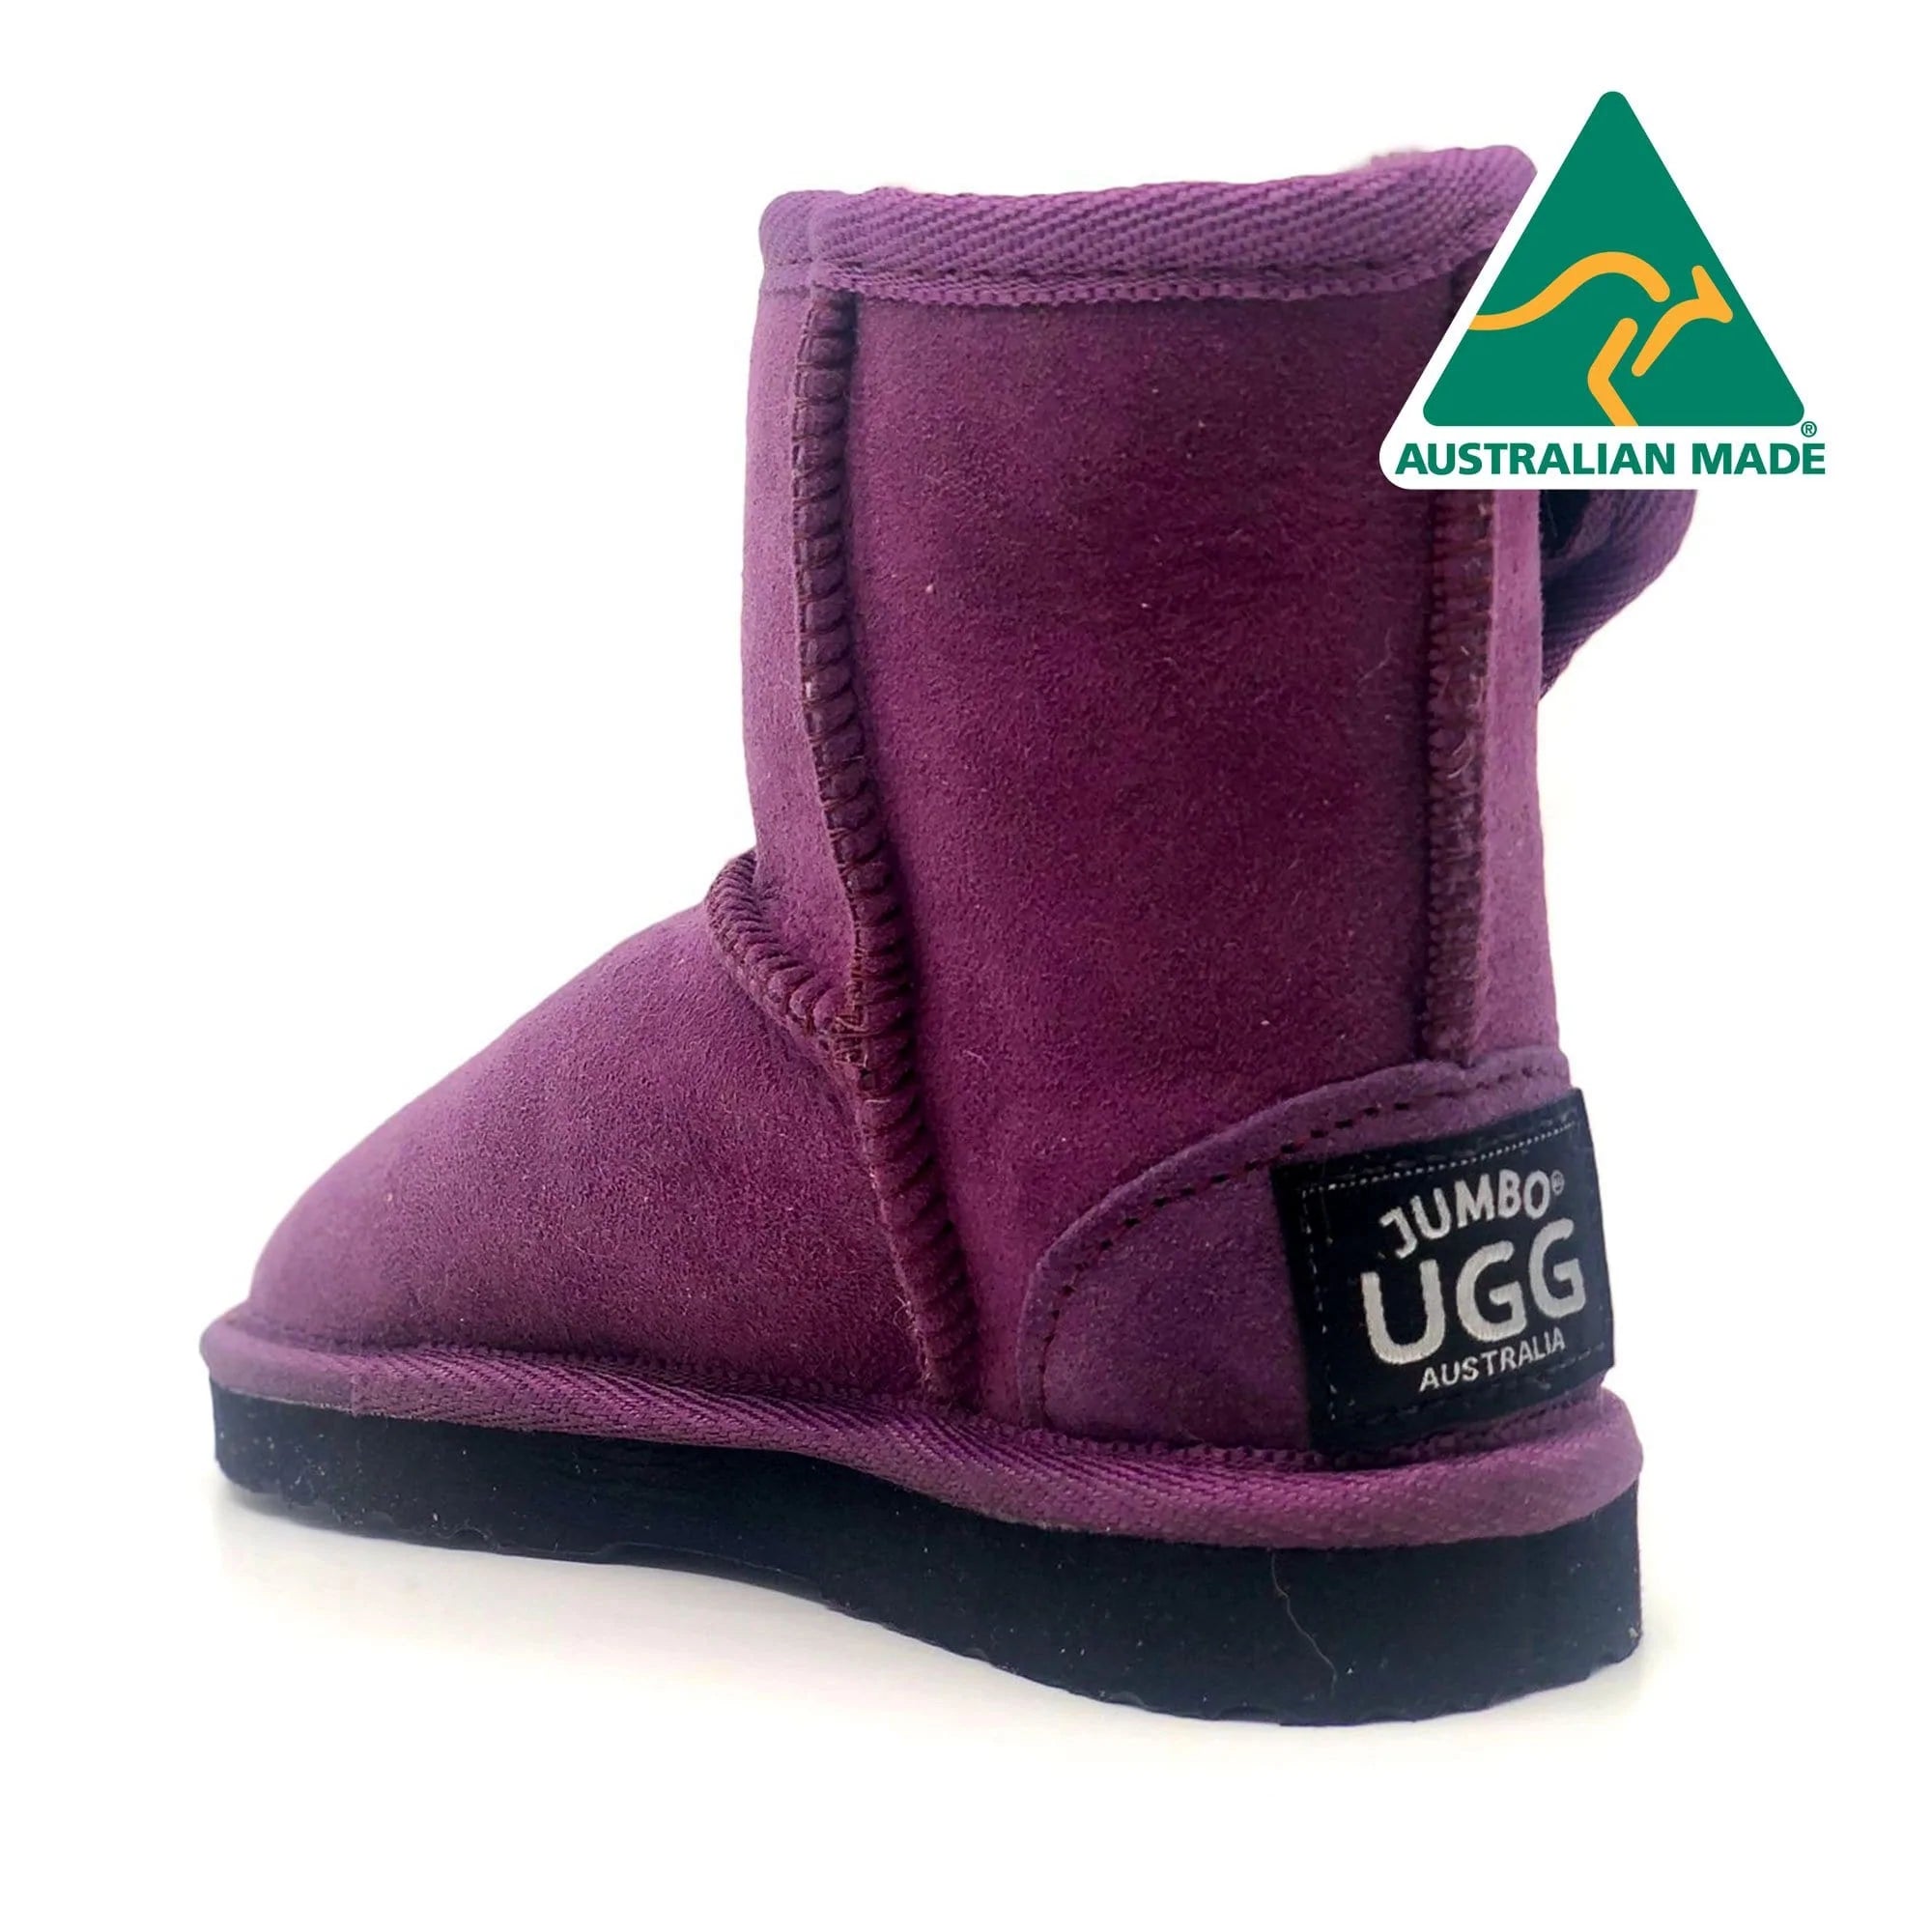 Ugg Boots - UGG Sam Kids Boots - Made in Australia - Original UGG Australia Classic